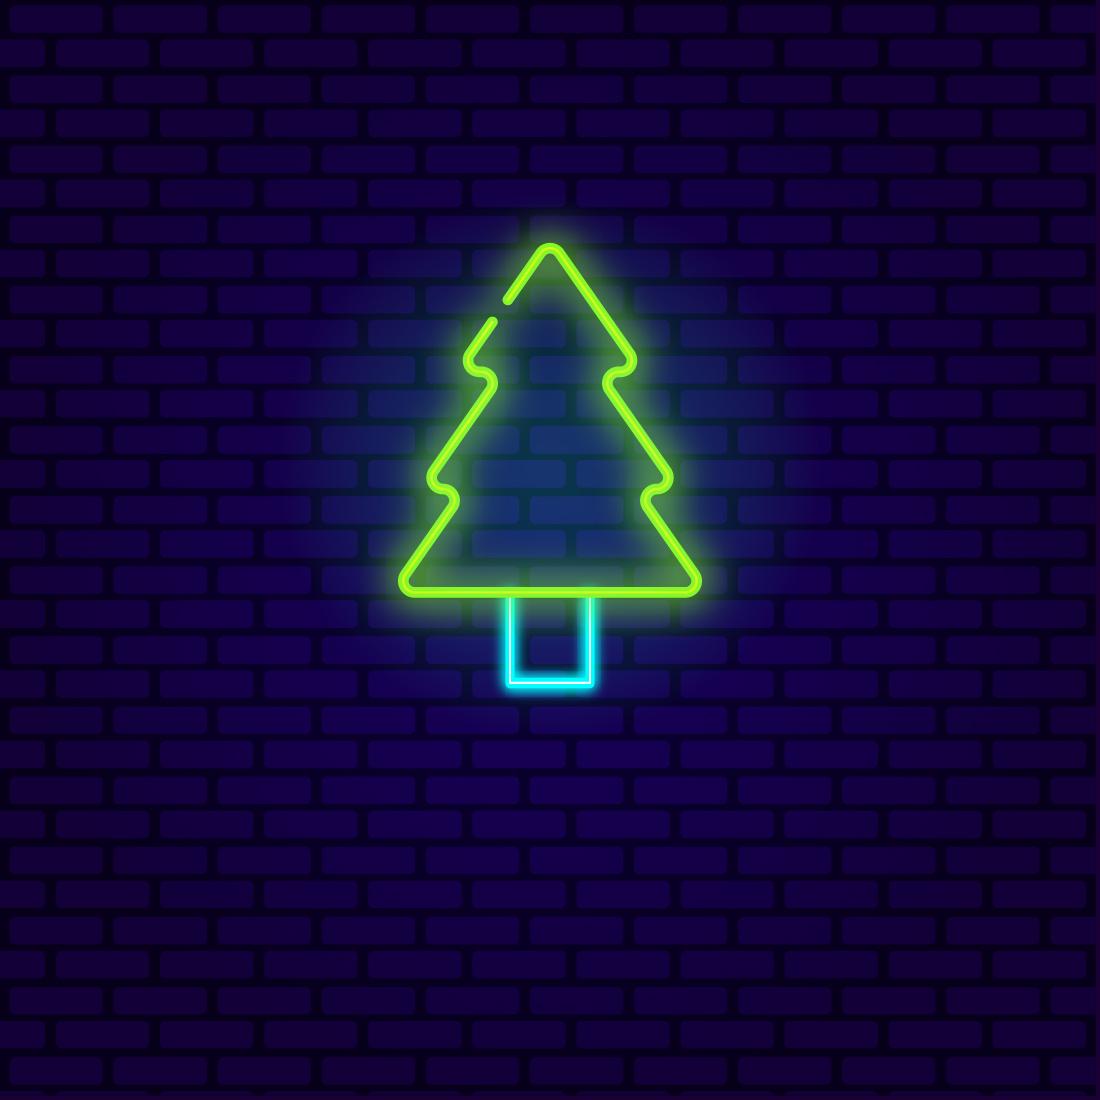 Neon Christmas Tree preview image.